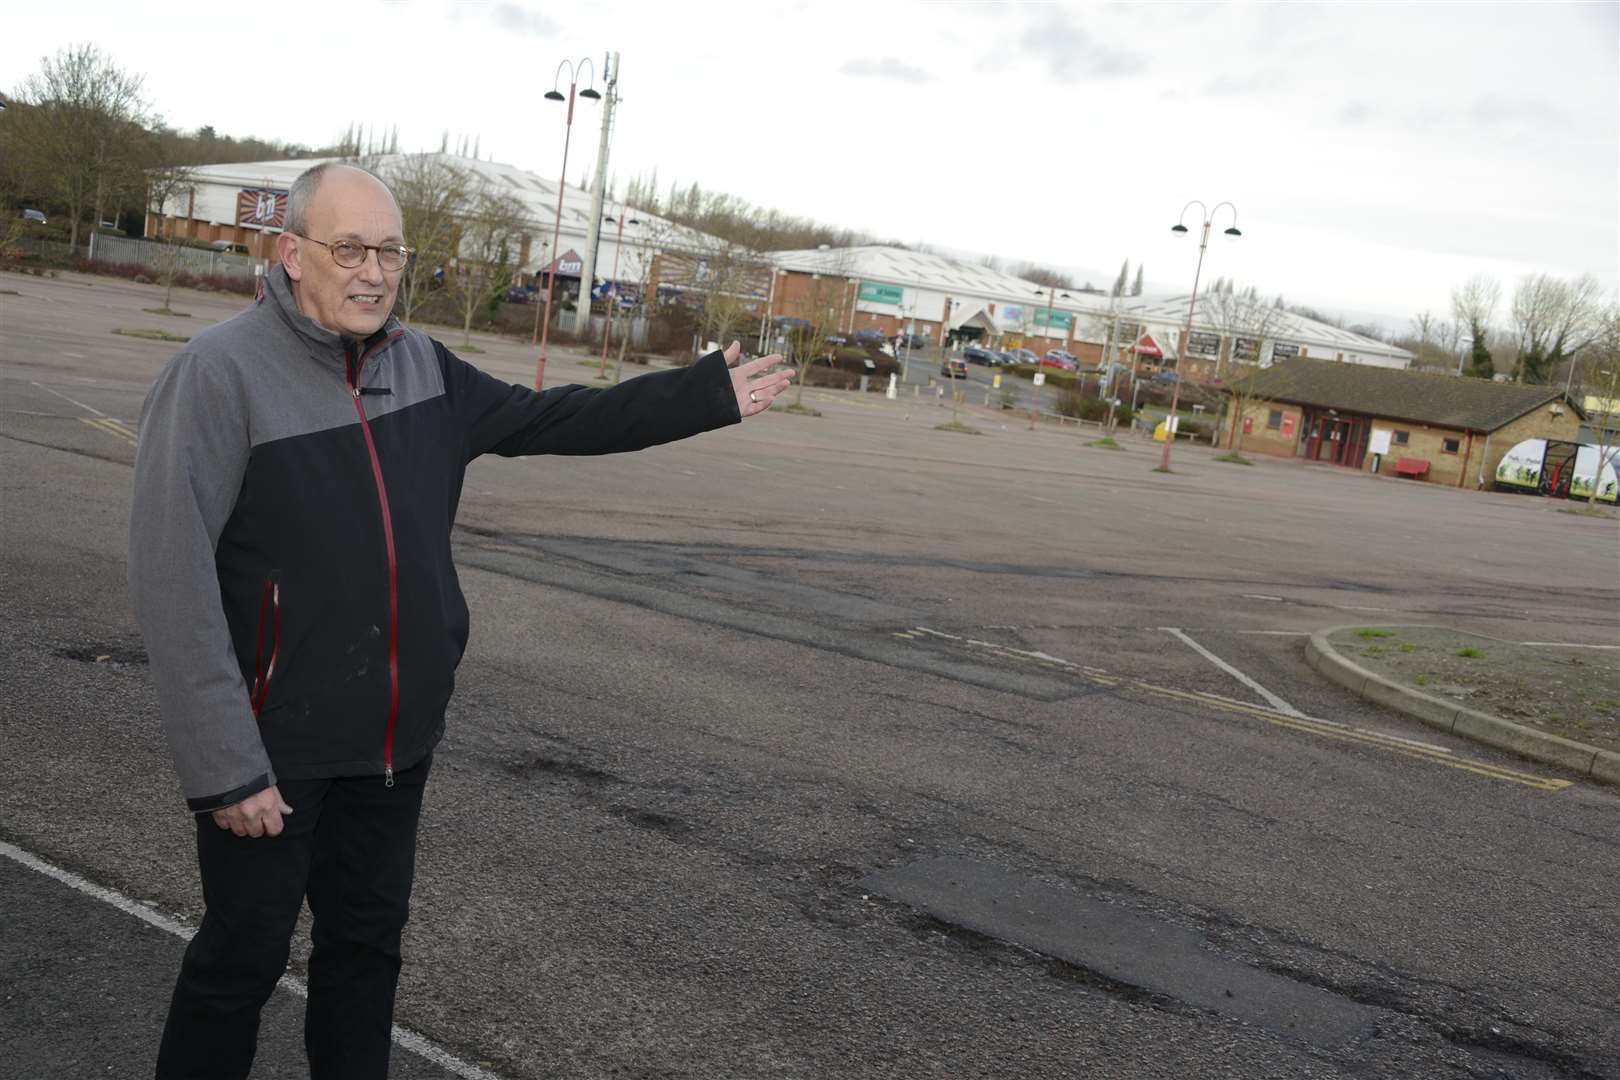 Derek Maslin wants to turn the car park into an overnight lorry park